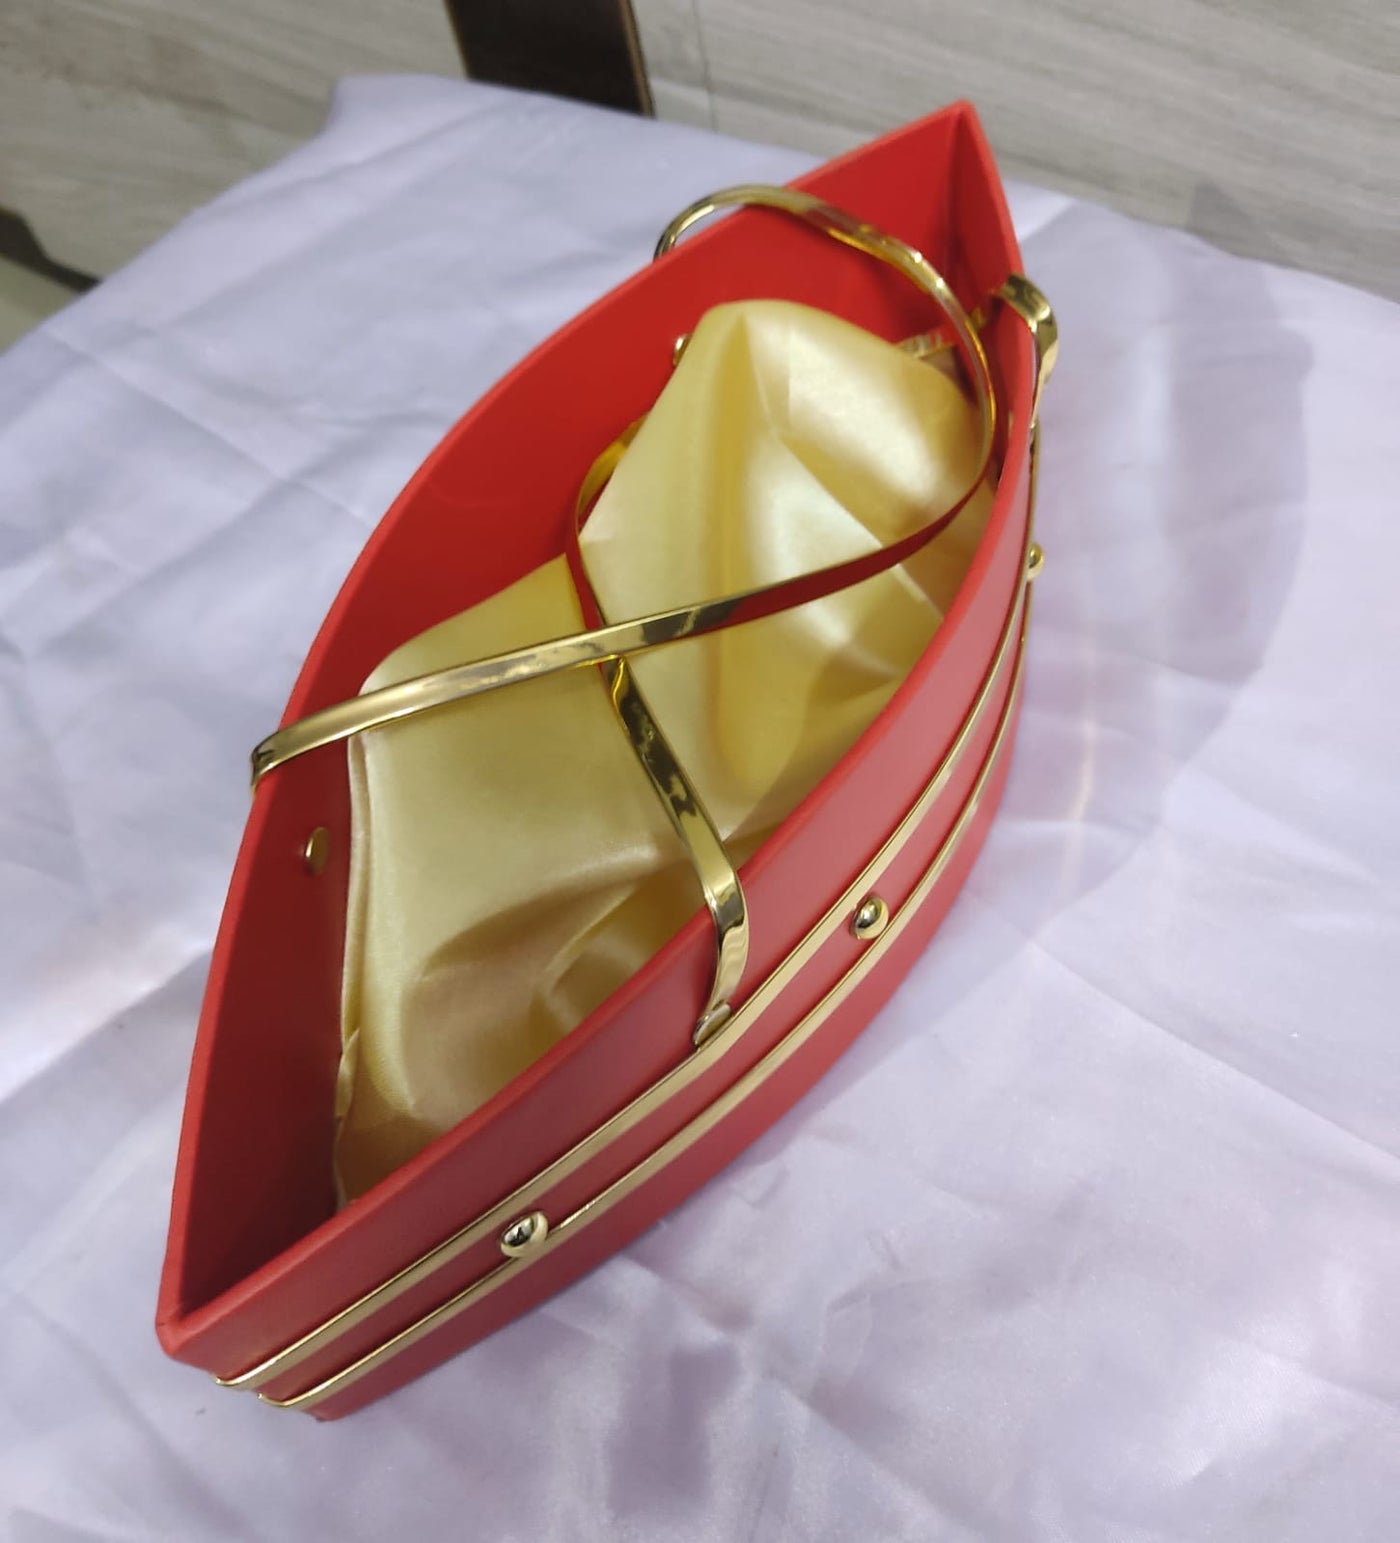 New Jaipur Handicraft Gift Baskets 💛 Assorted colors / 50 Pack of 50 Boat Shaped Gift 🎁 Hamper Baskets For Giveaways (size - 12*5 inch) / Trending hampers for making Diwali & Wedding Gifts